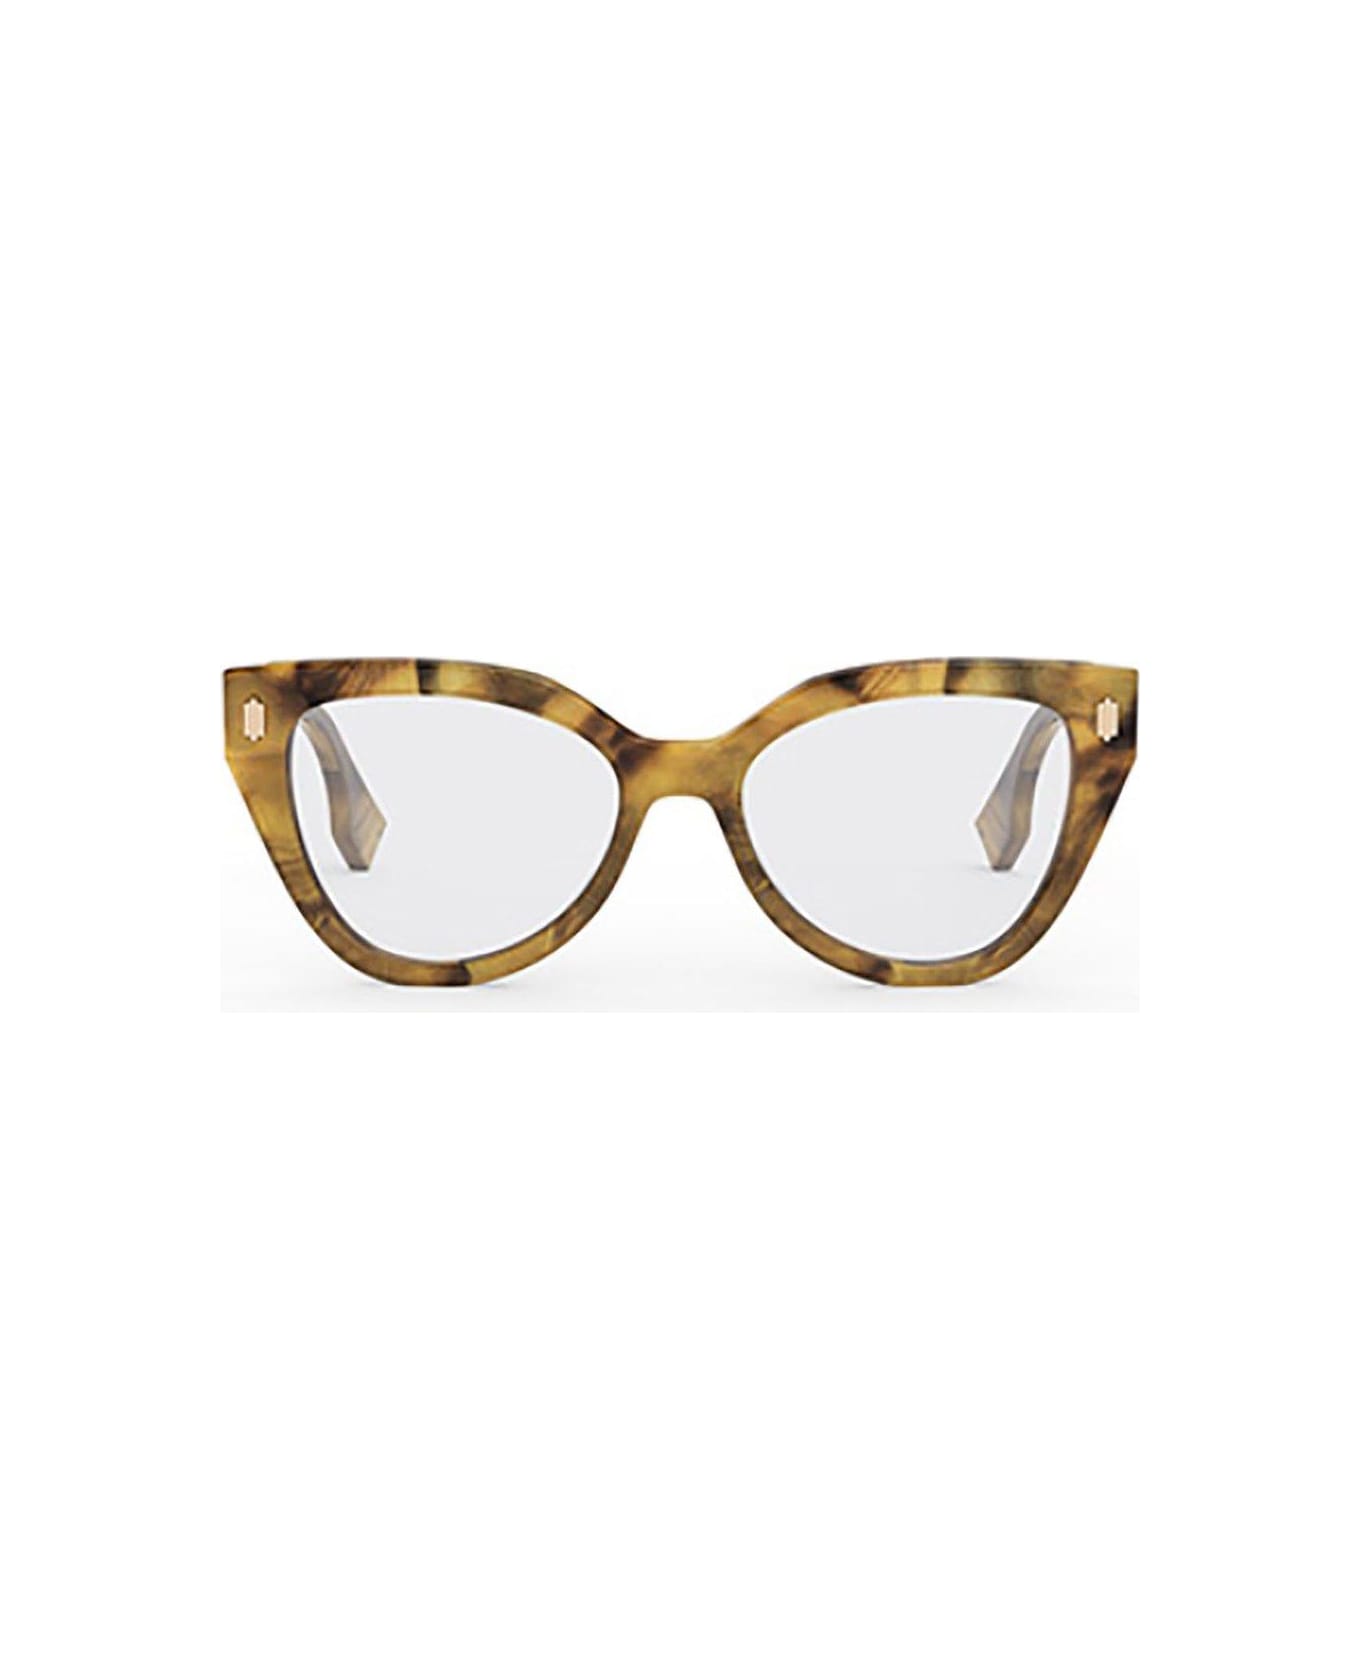 Fendi Eyewear Cat-eye Frame Glasses - 060